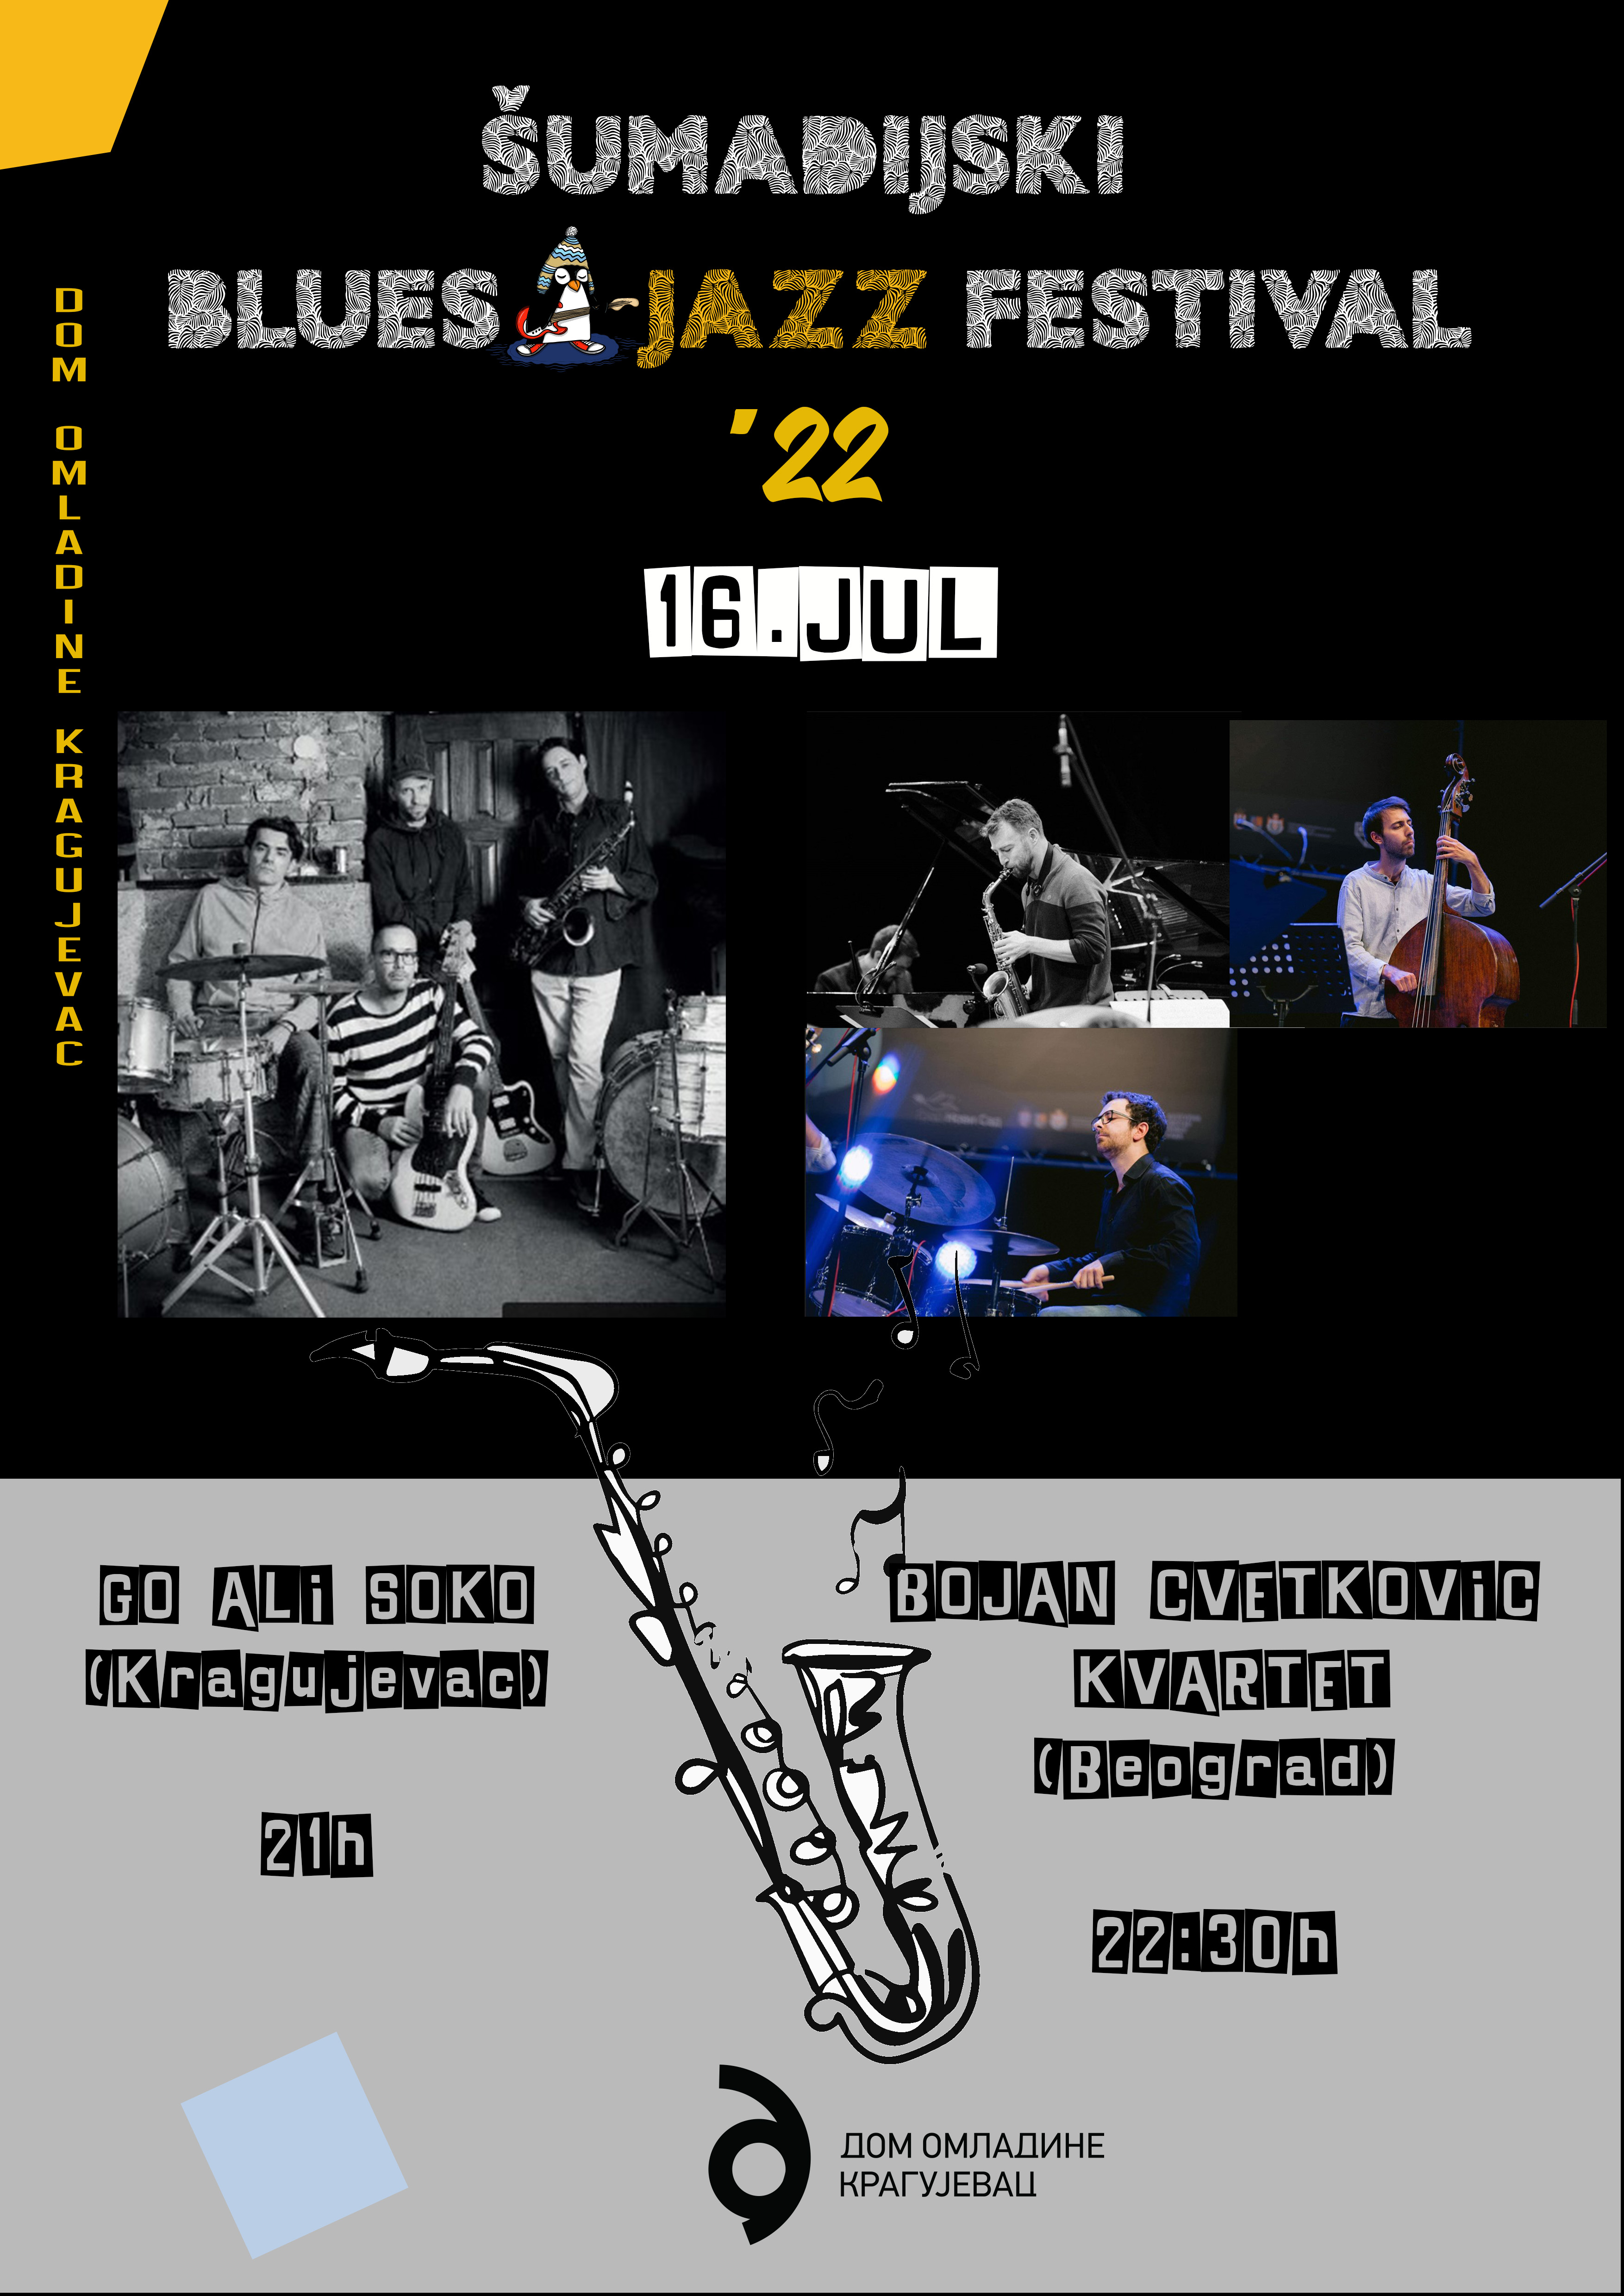 sumadijski blues jazz fest 16 jul